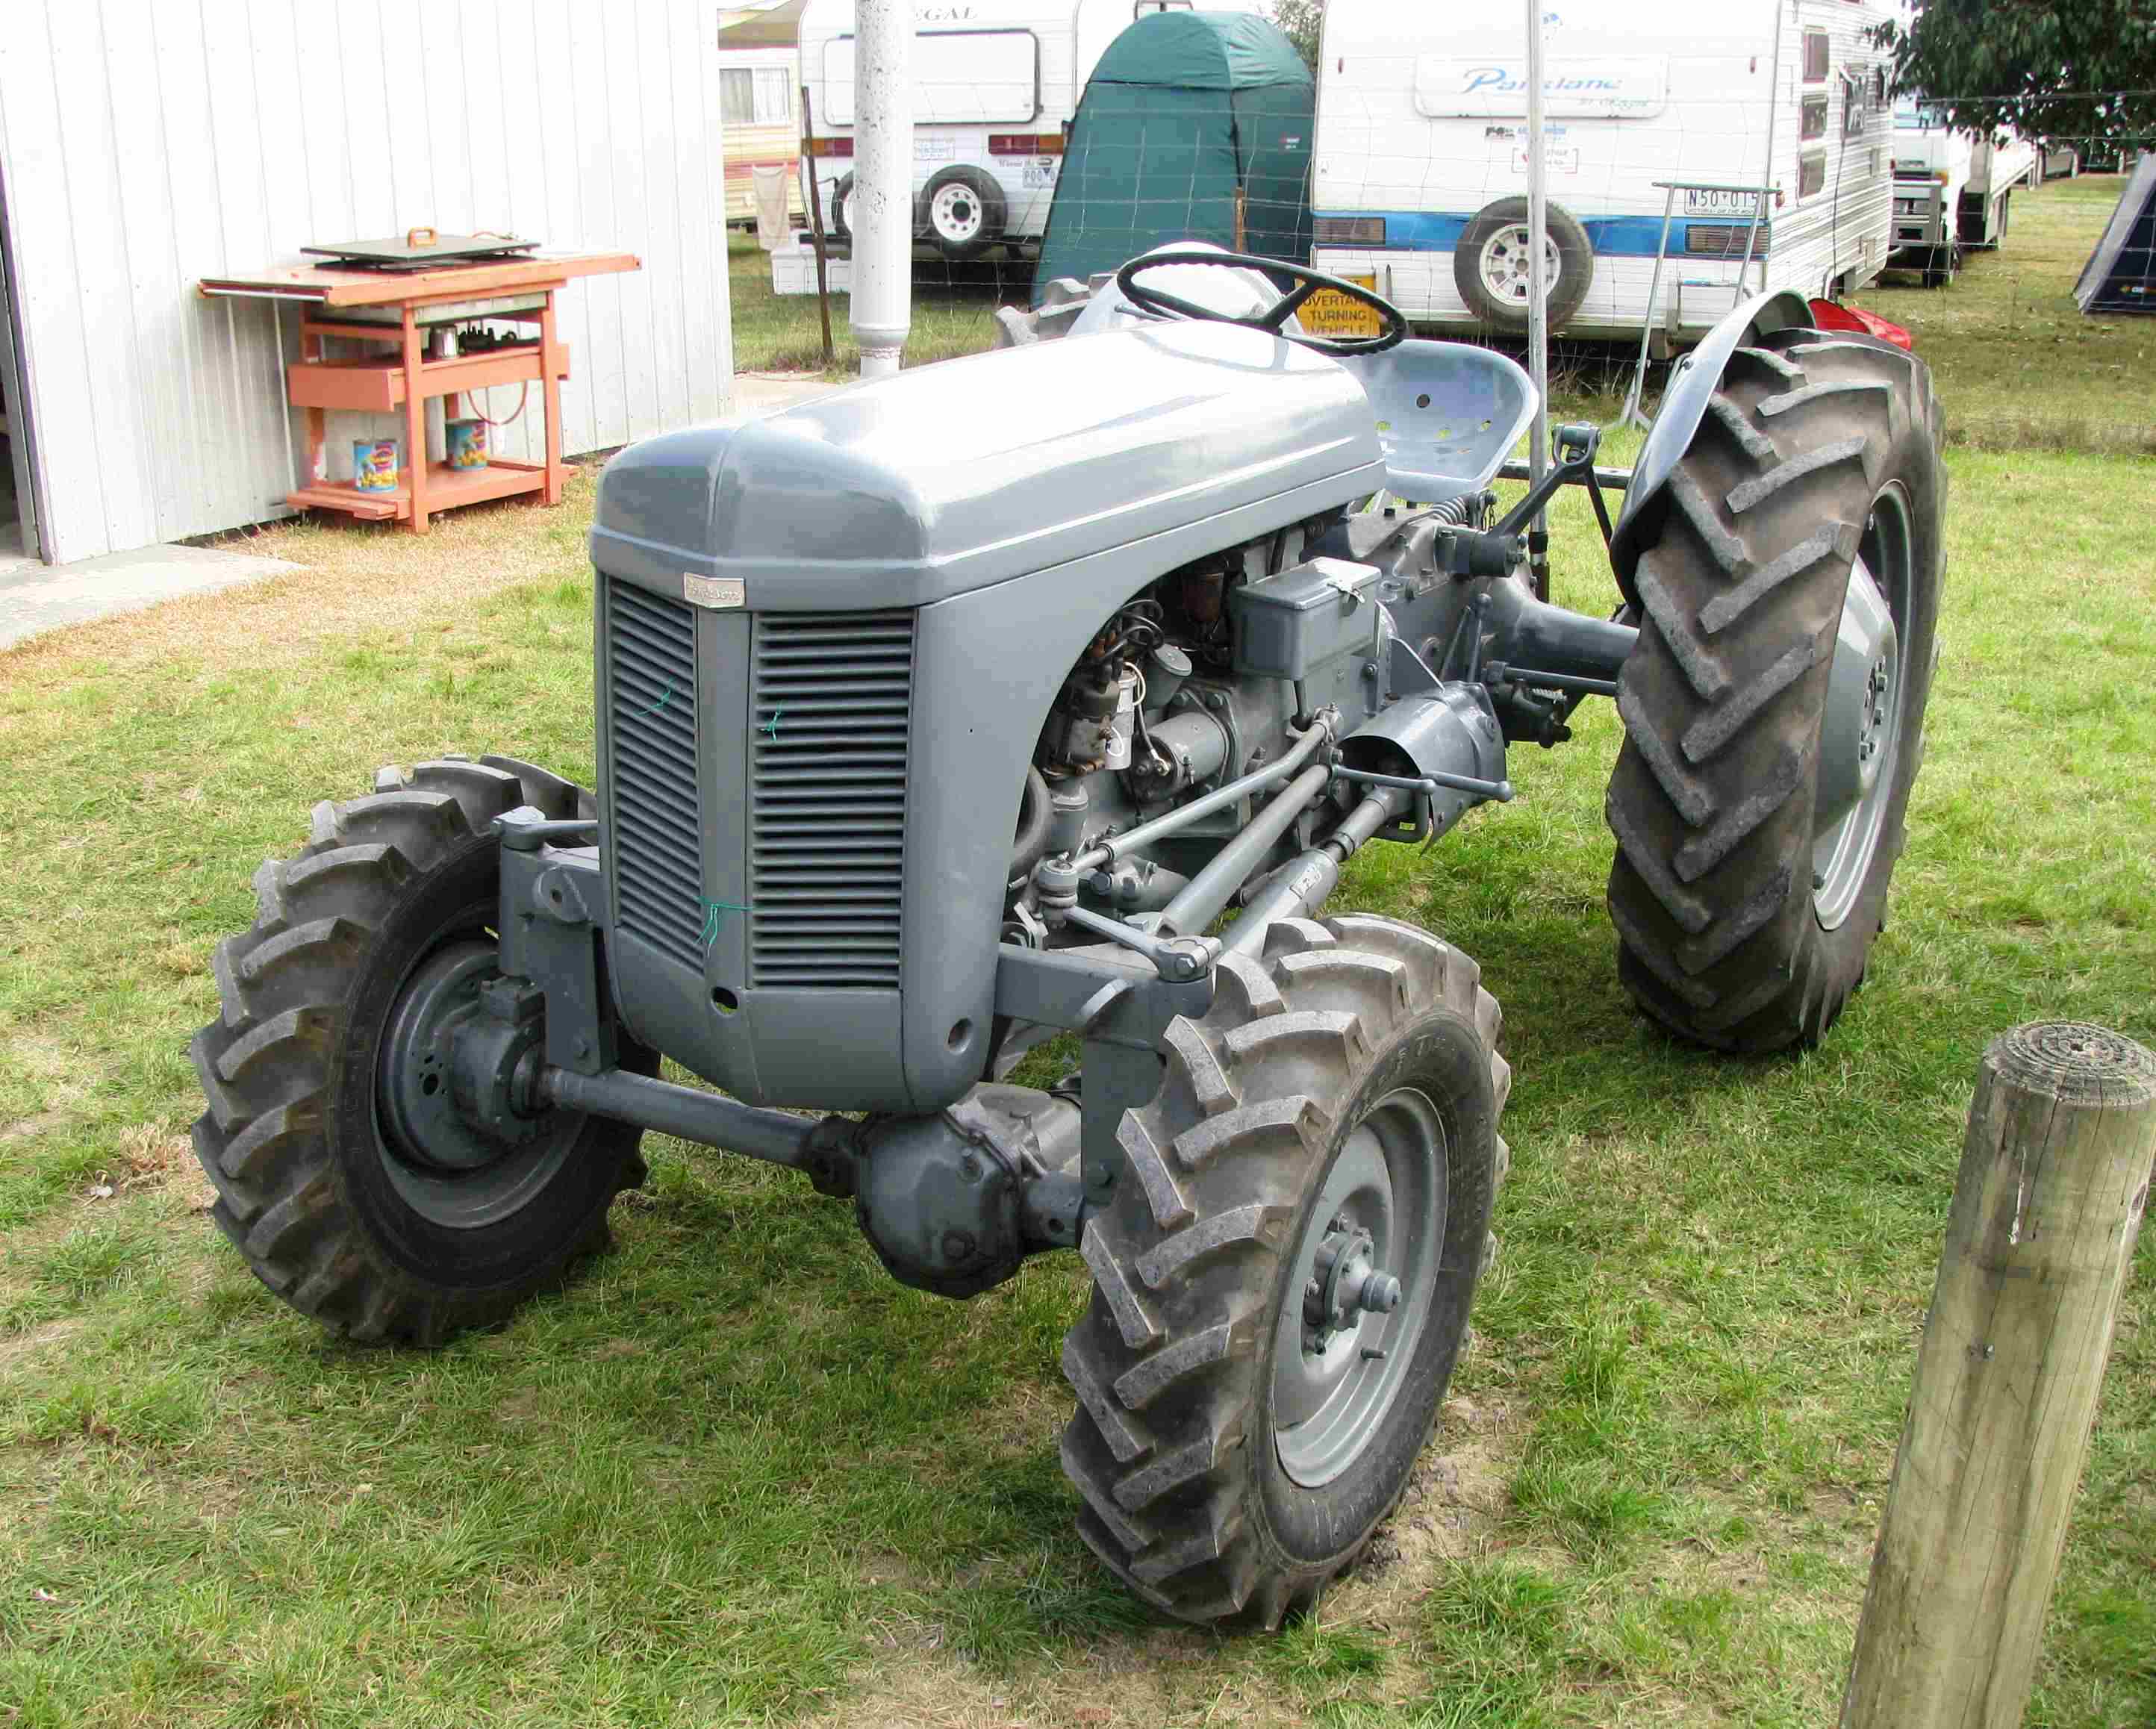 Ferguson tractor 4x4.jpg 17-Oct-2011 07:19 391k